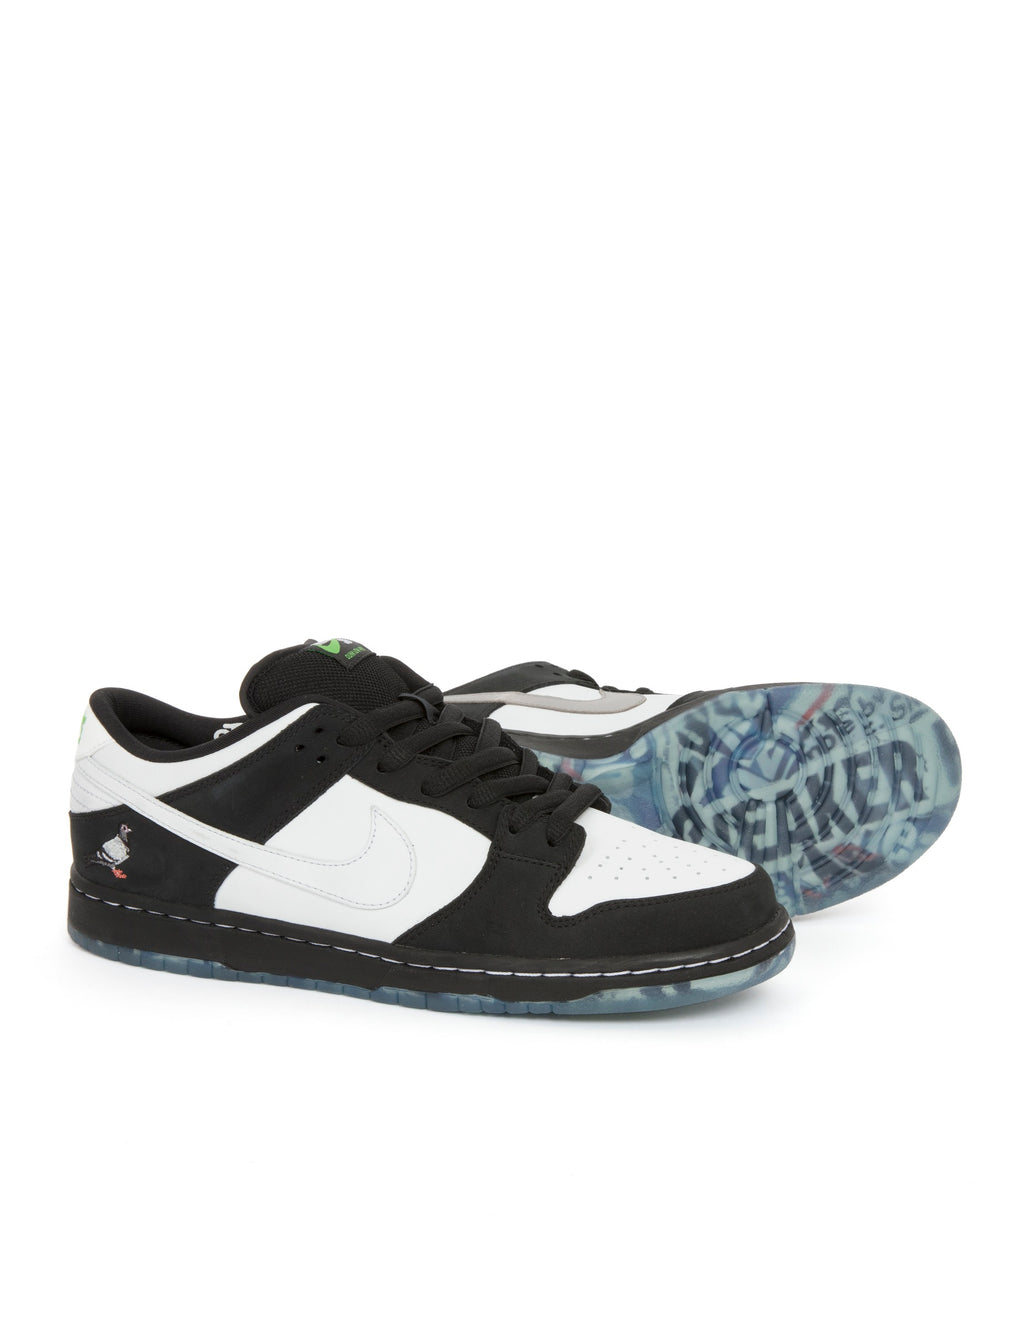 Staple x Nike SB Dunk SB Pigeon Panda - Shoes | Staple Pigeon